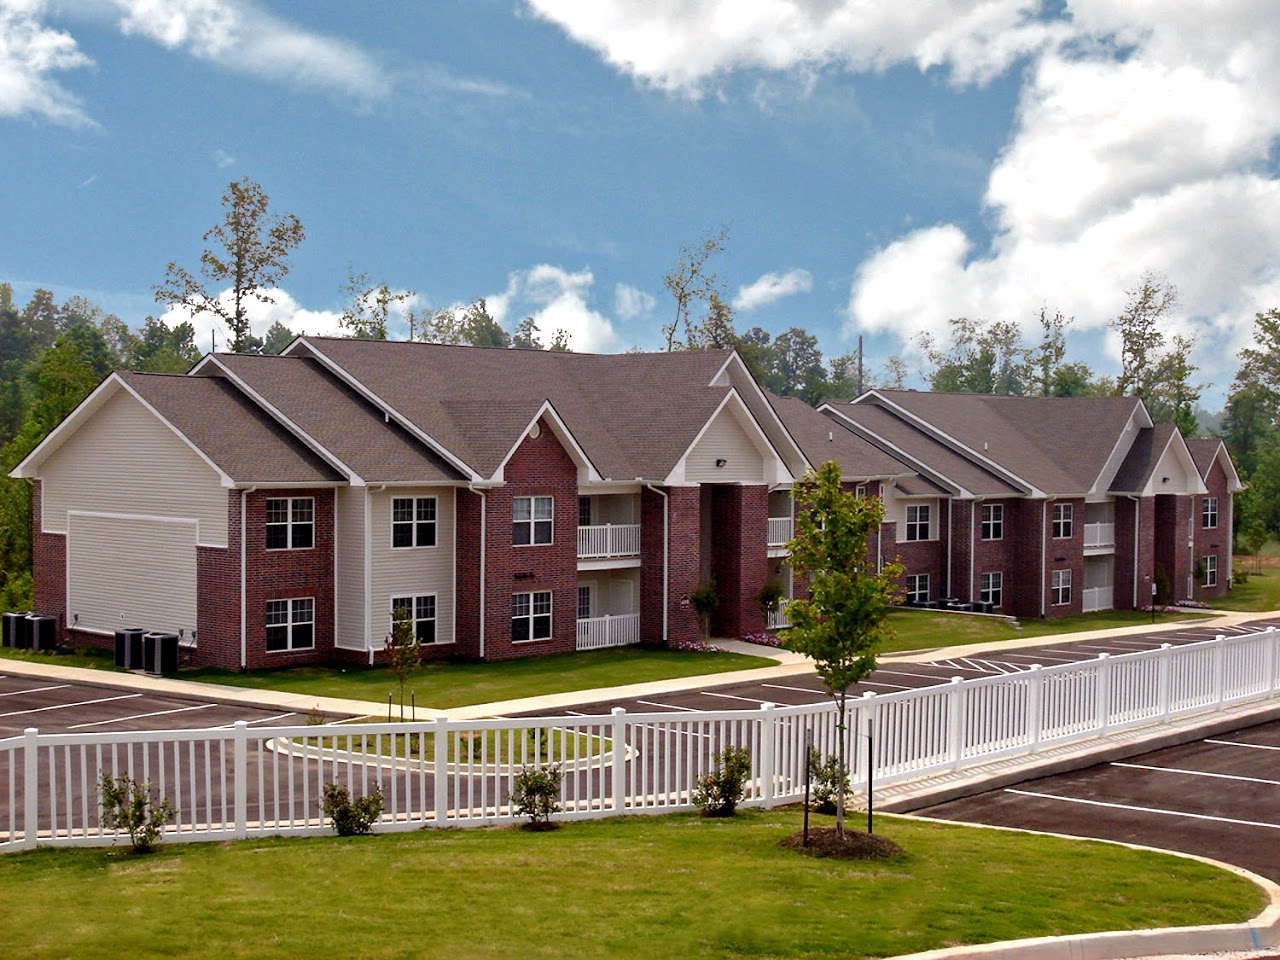 Photo of RIDGE AT JACKSON. Affordable housing located at 100 RICH SMITH WAY JACKSON, TN 38301